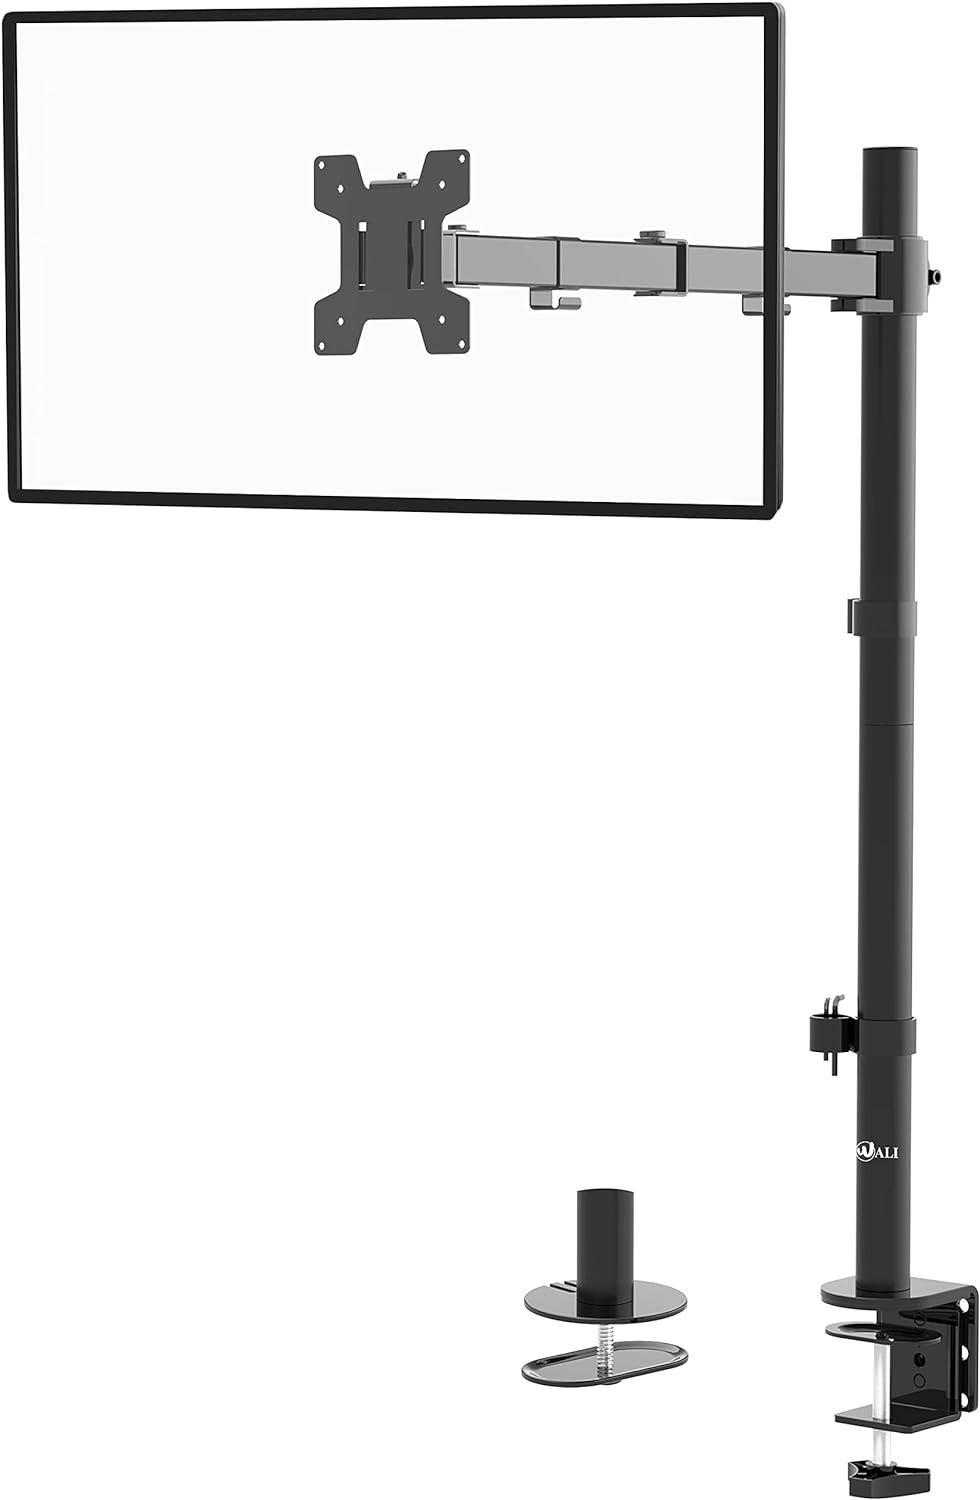 WALI Monitor Arm Mount for Desk, Single Extra Tall VESA Computer Desk Mount, up